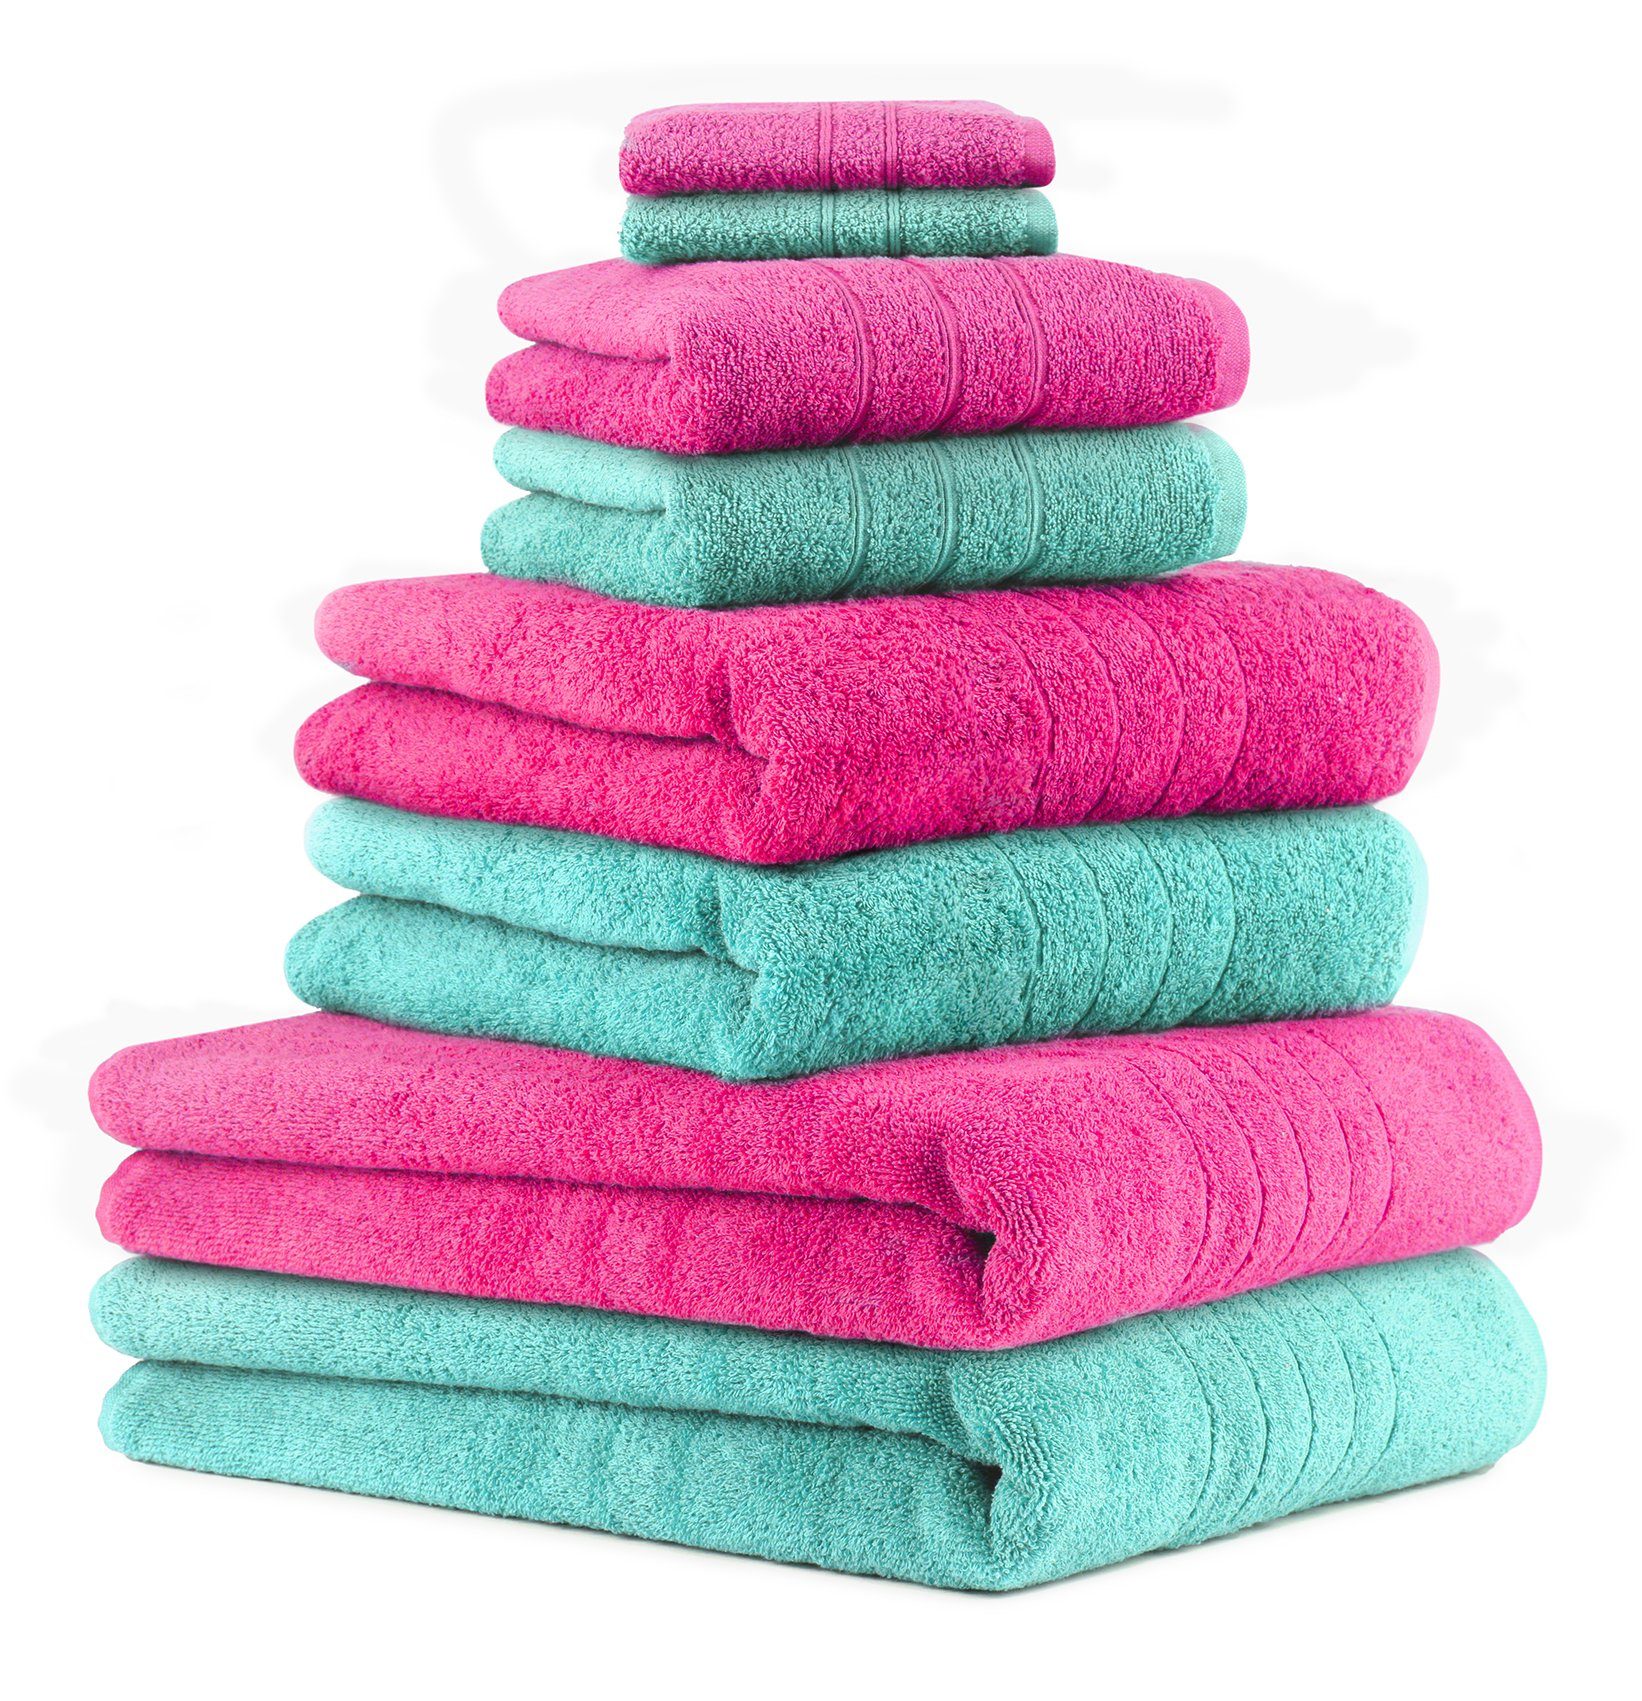 Betz Handtuch 2 Fuchsia 2 100% 2 100% Handtuch-Set Seiftücher 8-TLG. türkis, Badetücher Farbe 2 Duschtücher und Deluxe (8-tlg) Handtücher Baumwolle Set Baumwolle